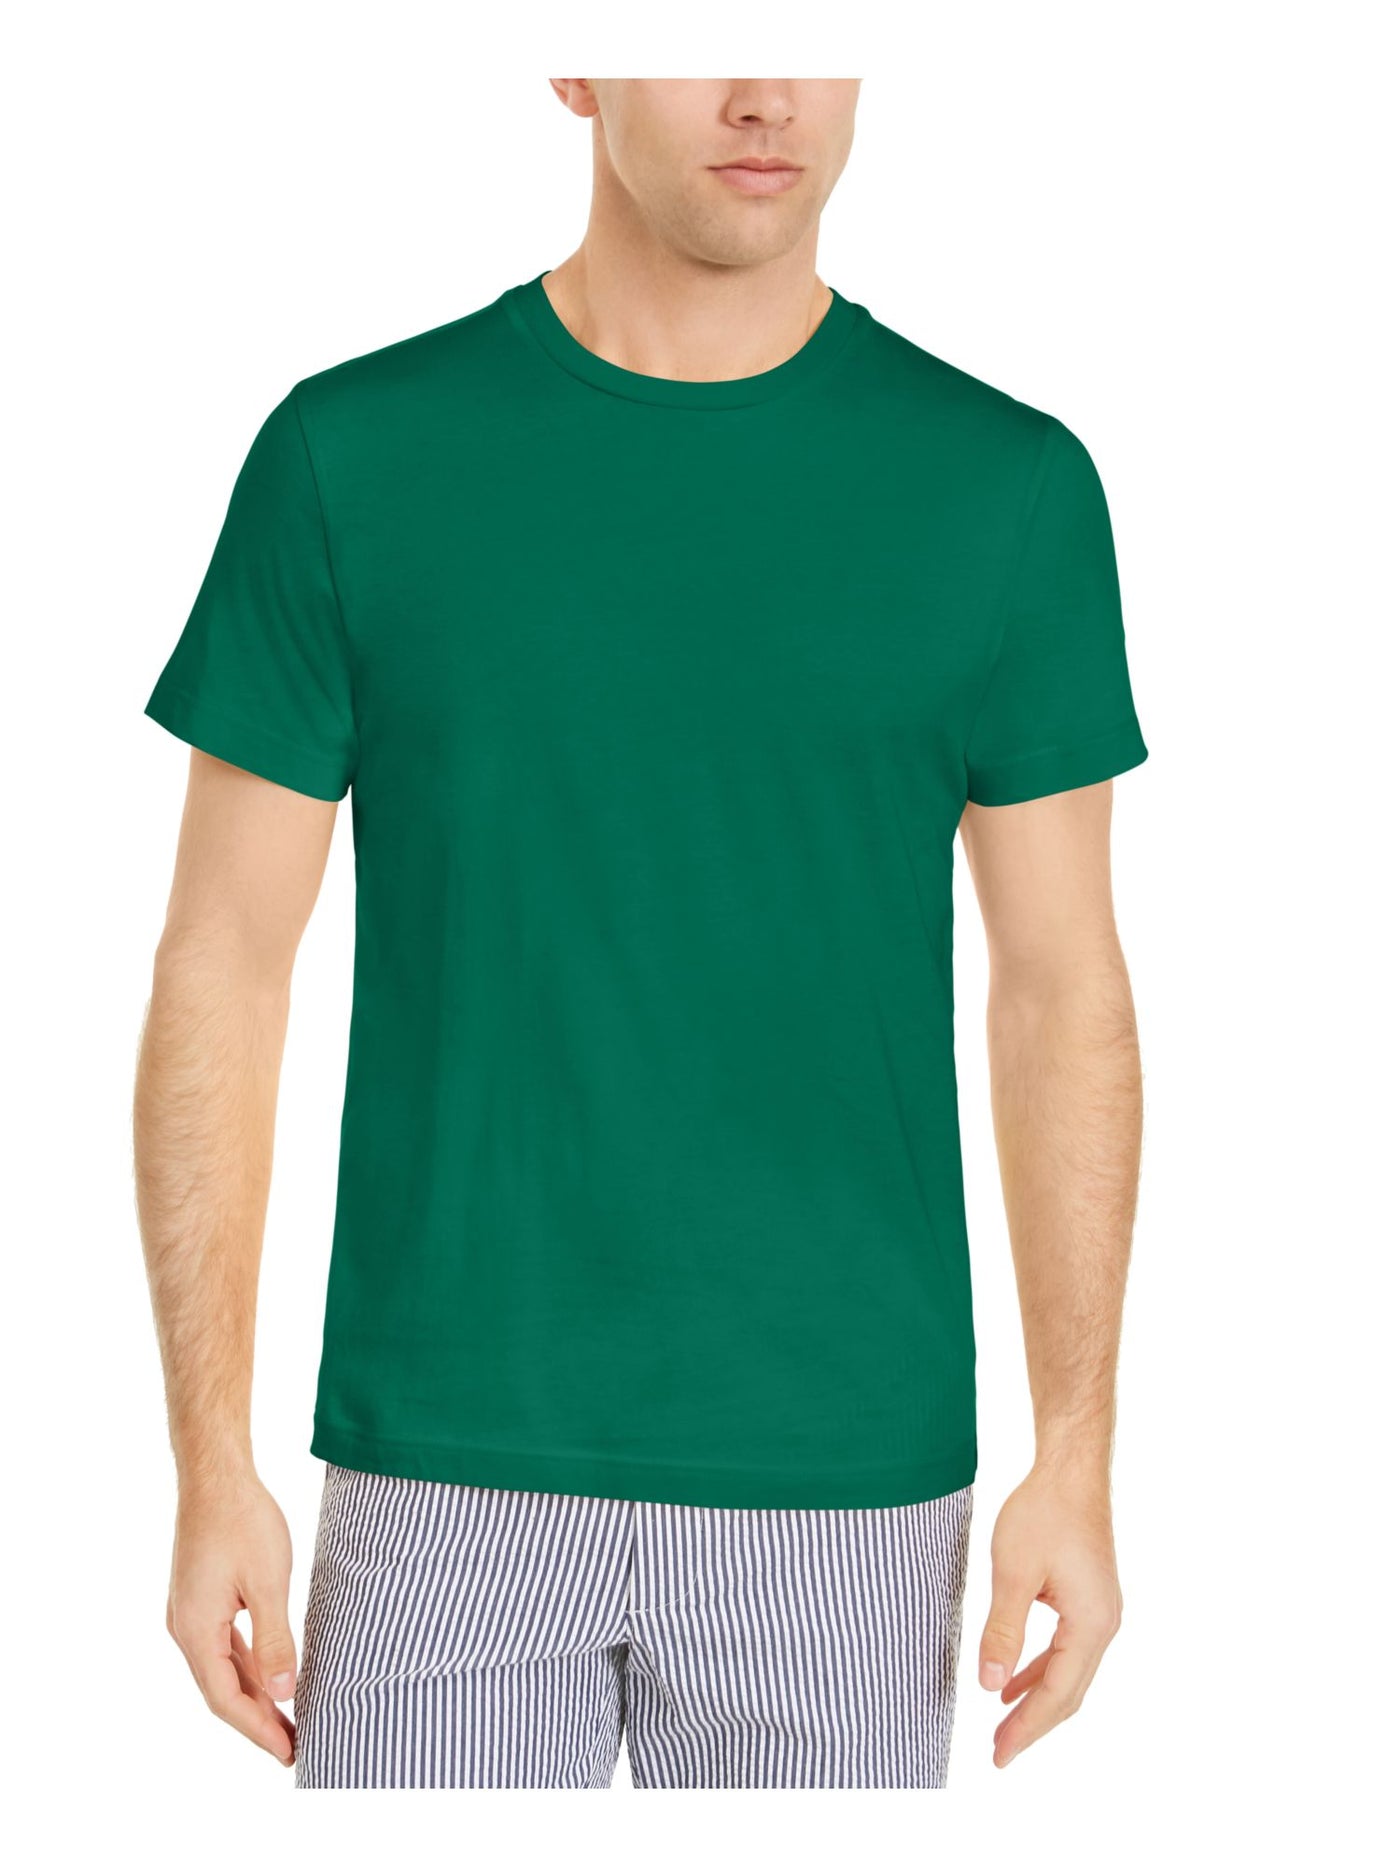 CLUBROOM Mens Green Lightweight, Classic Fit Moisture Wicking T-Shirt S